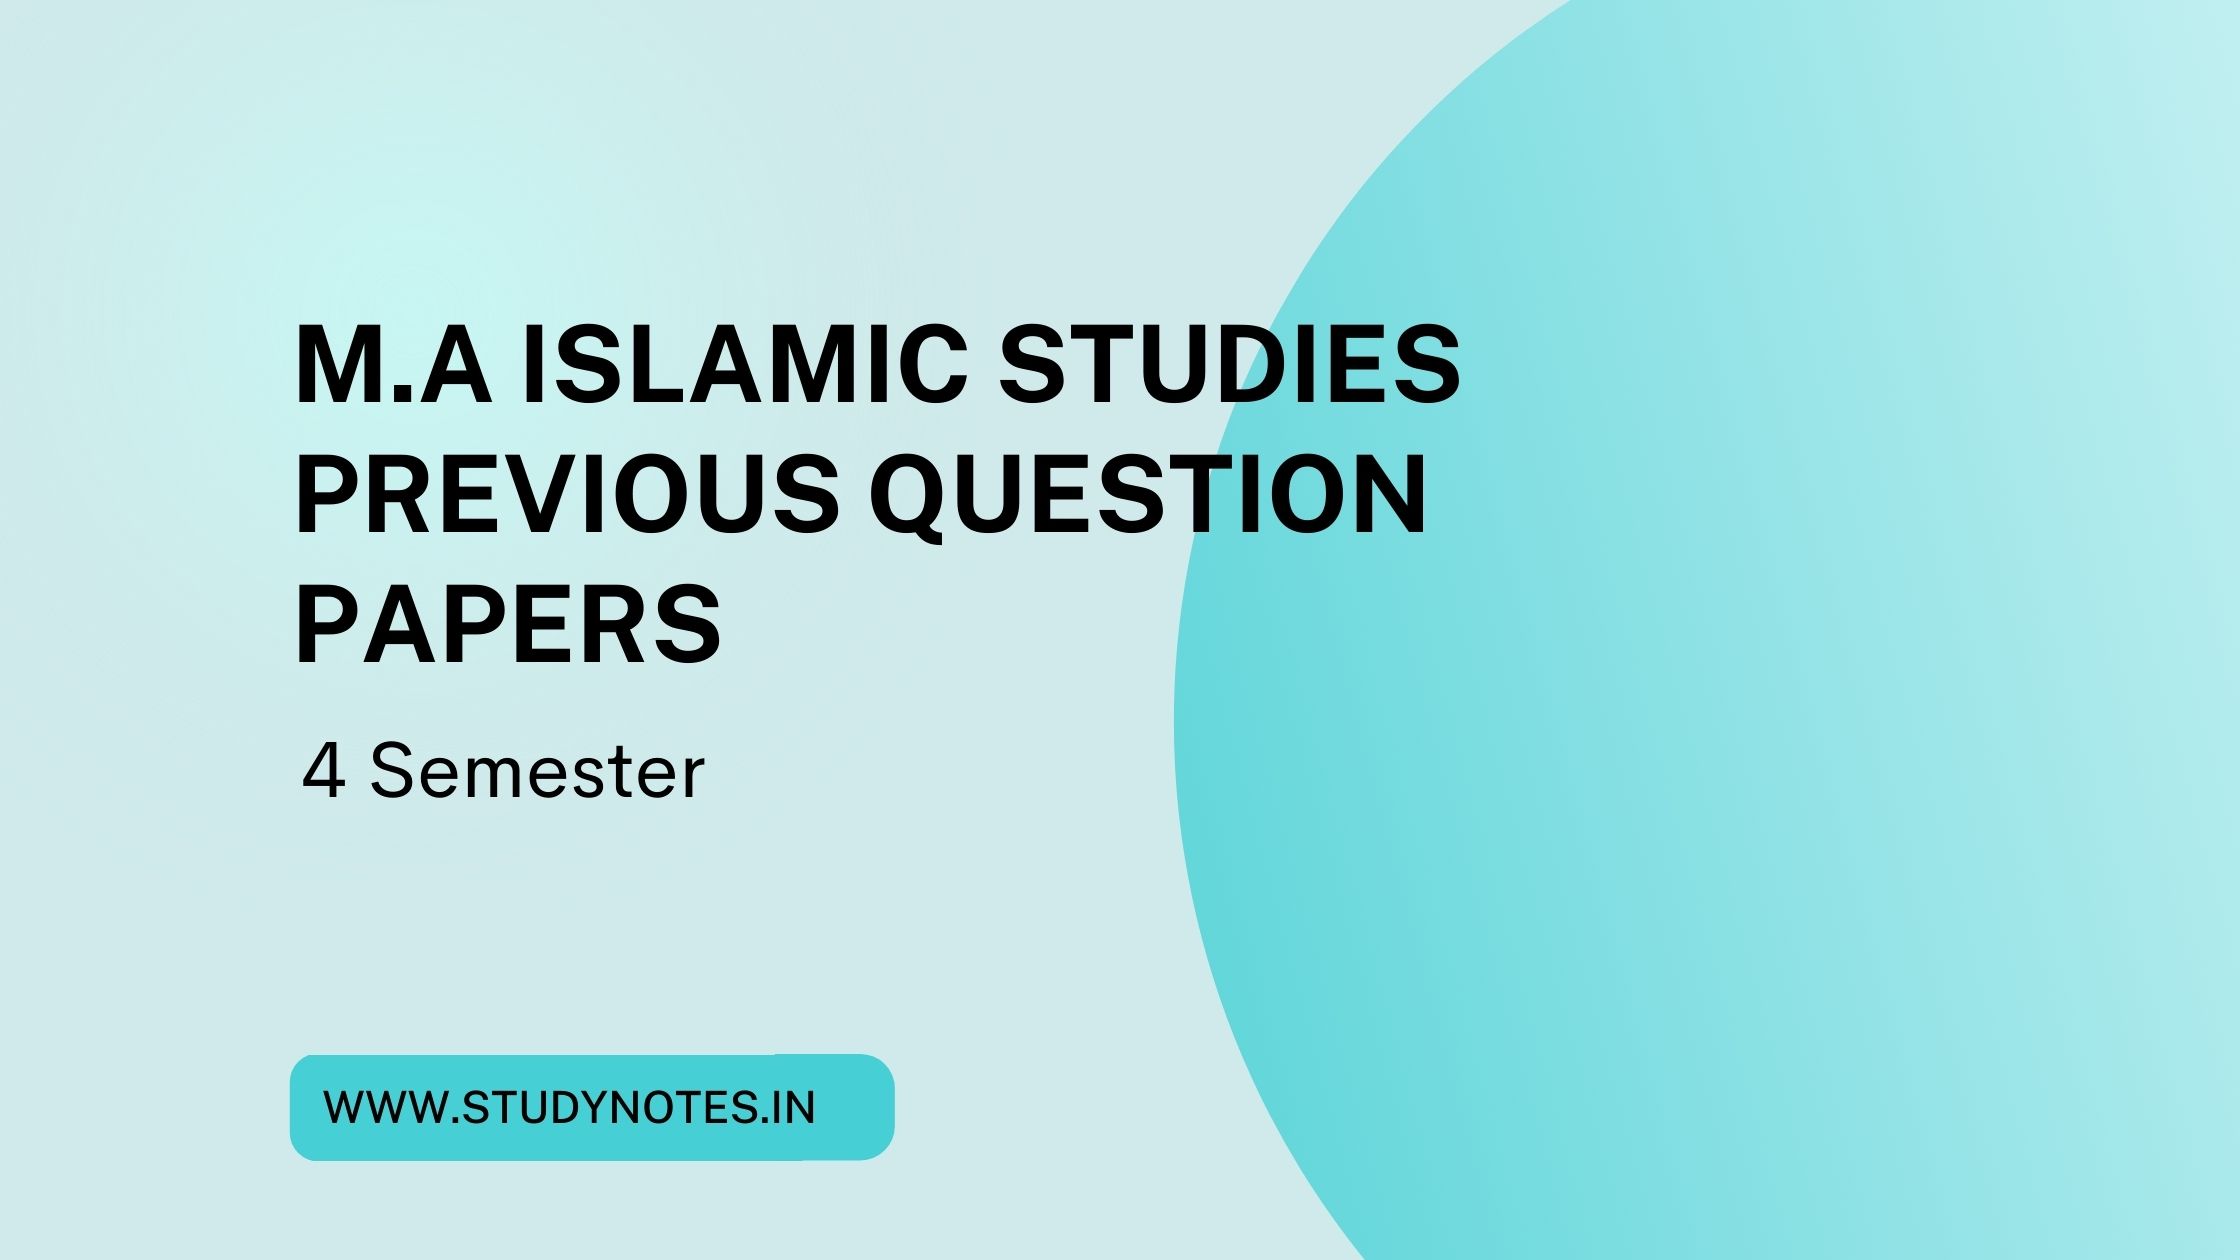 Fourth Semester M.A Islamic Studies Previous Question Paper